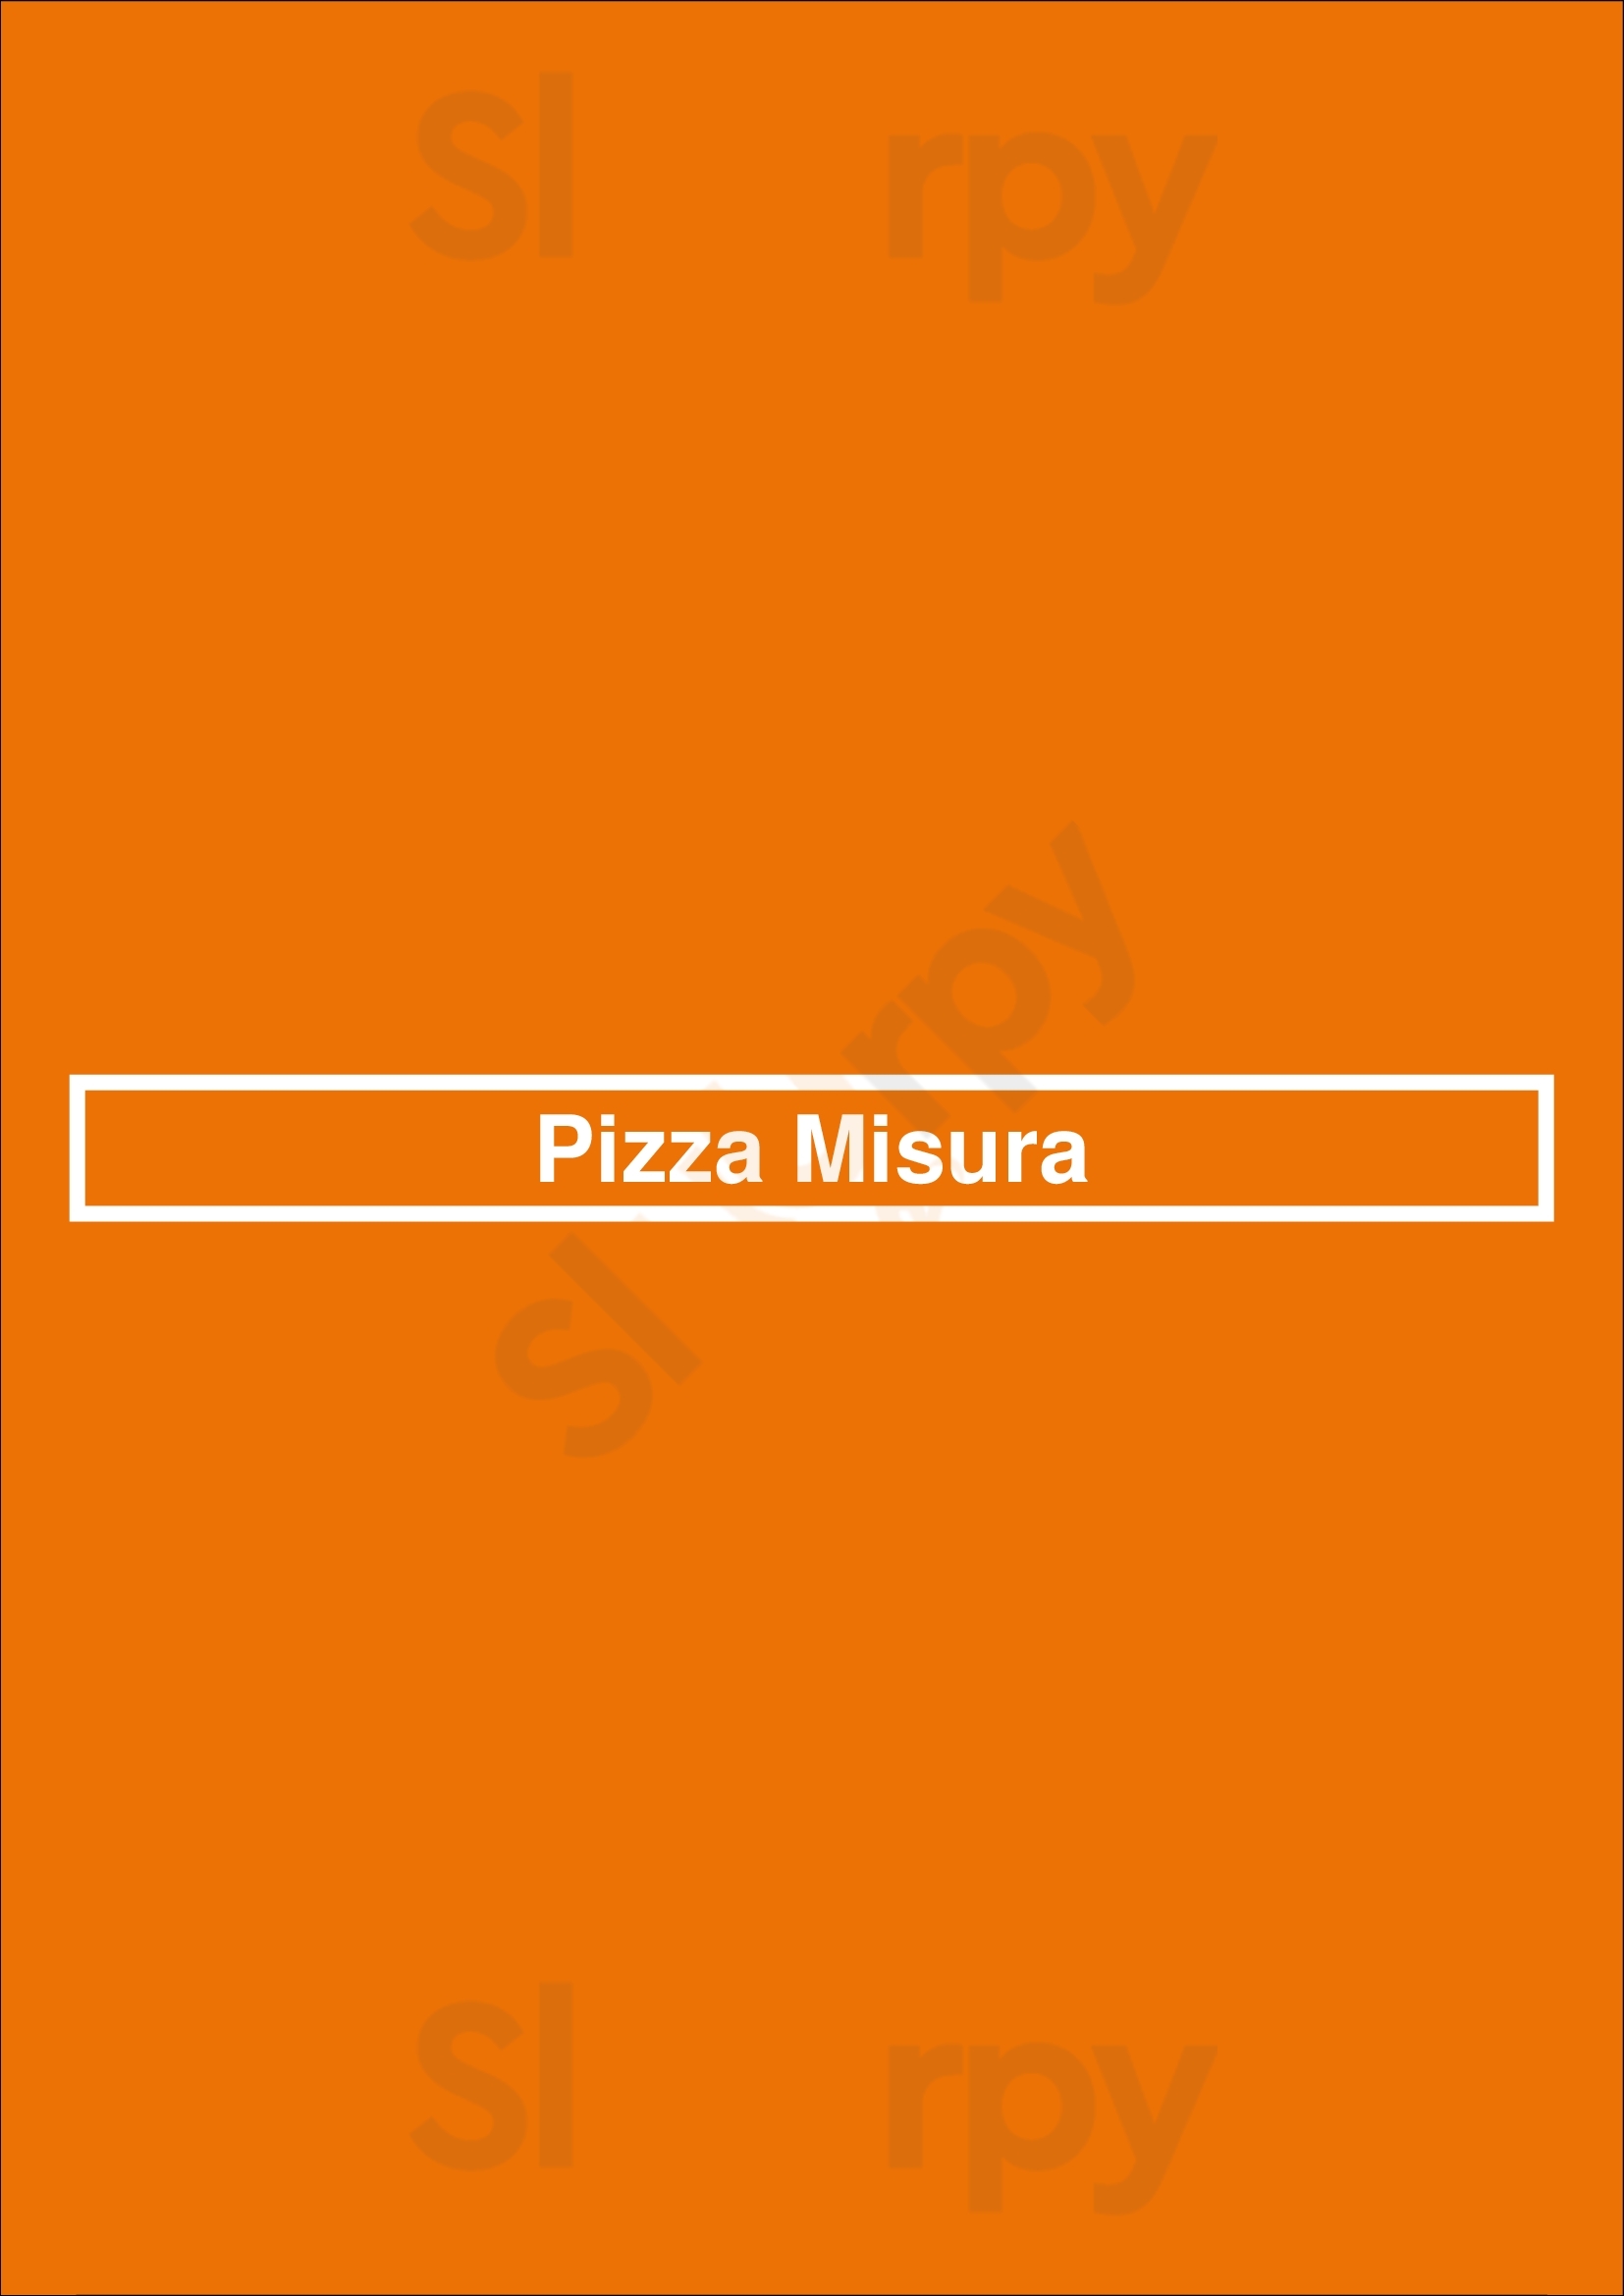 Pizza Misura Lisboa Menu - 1